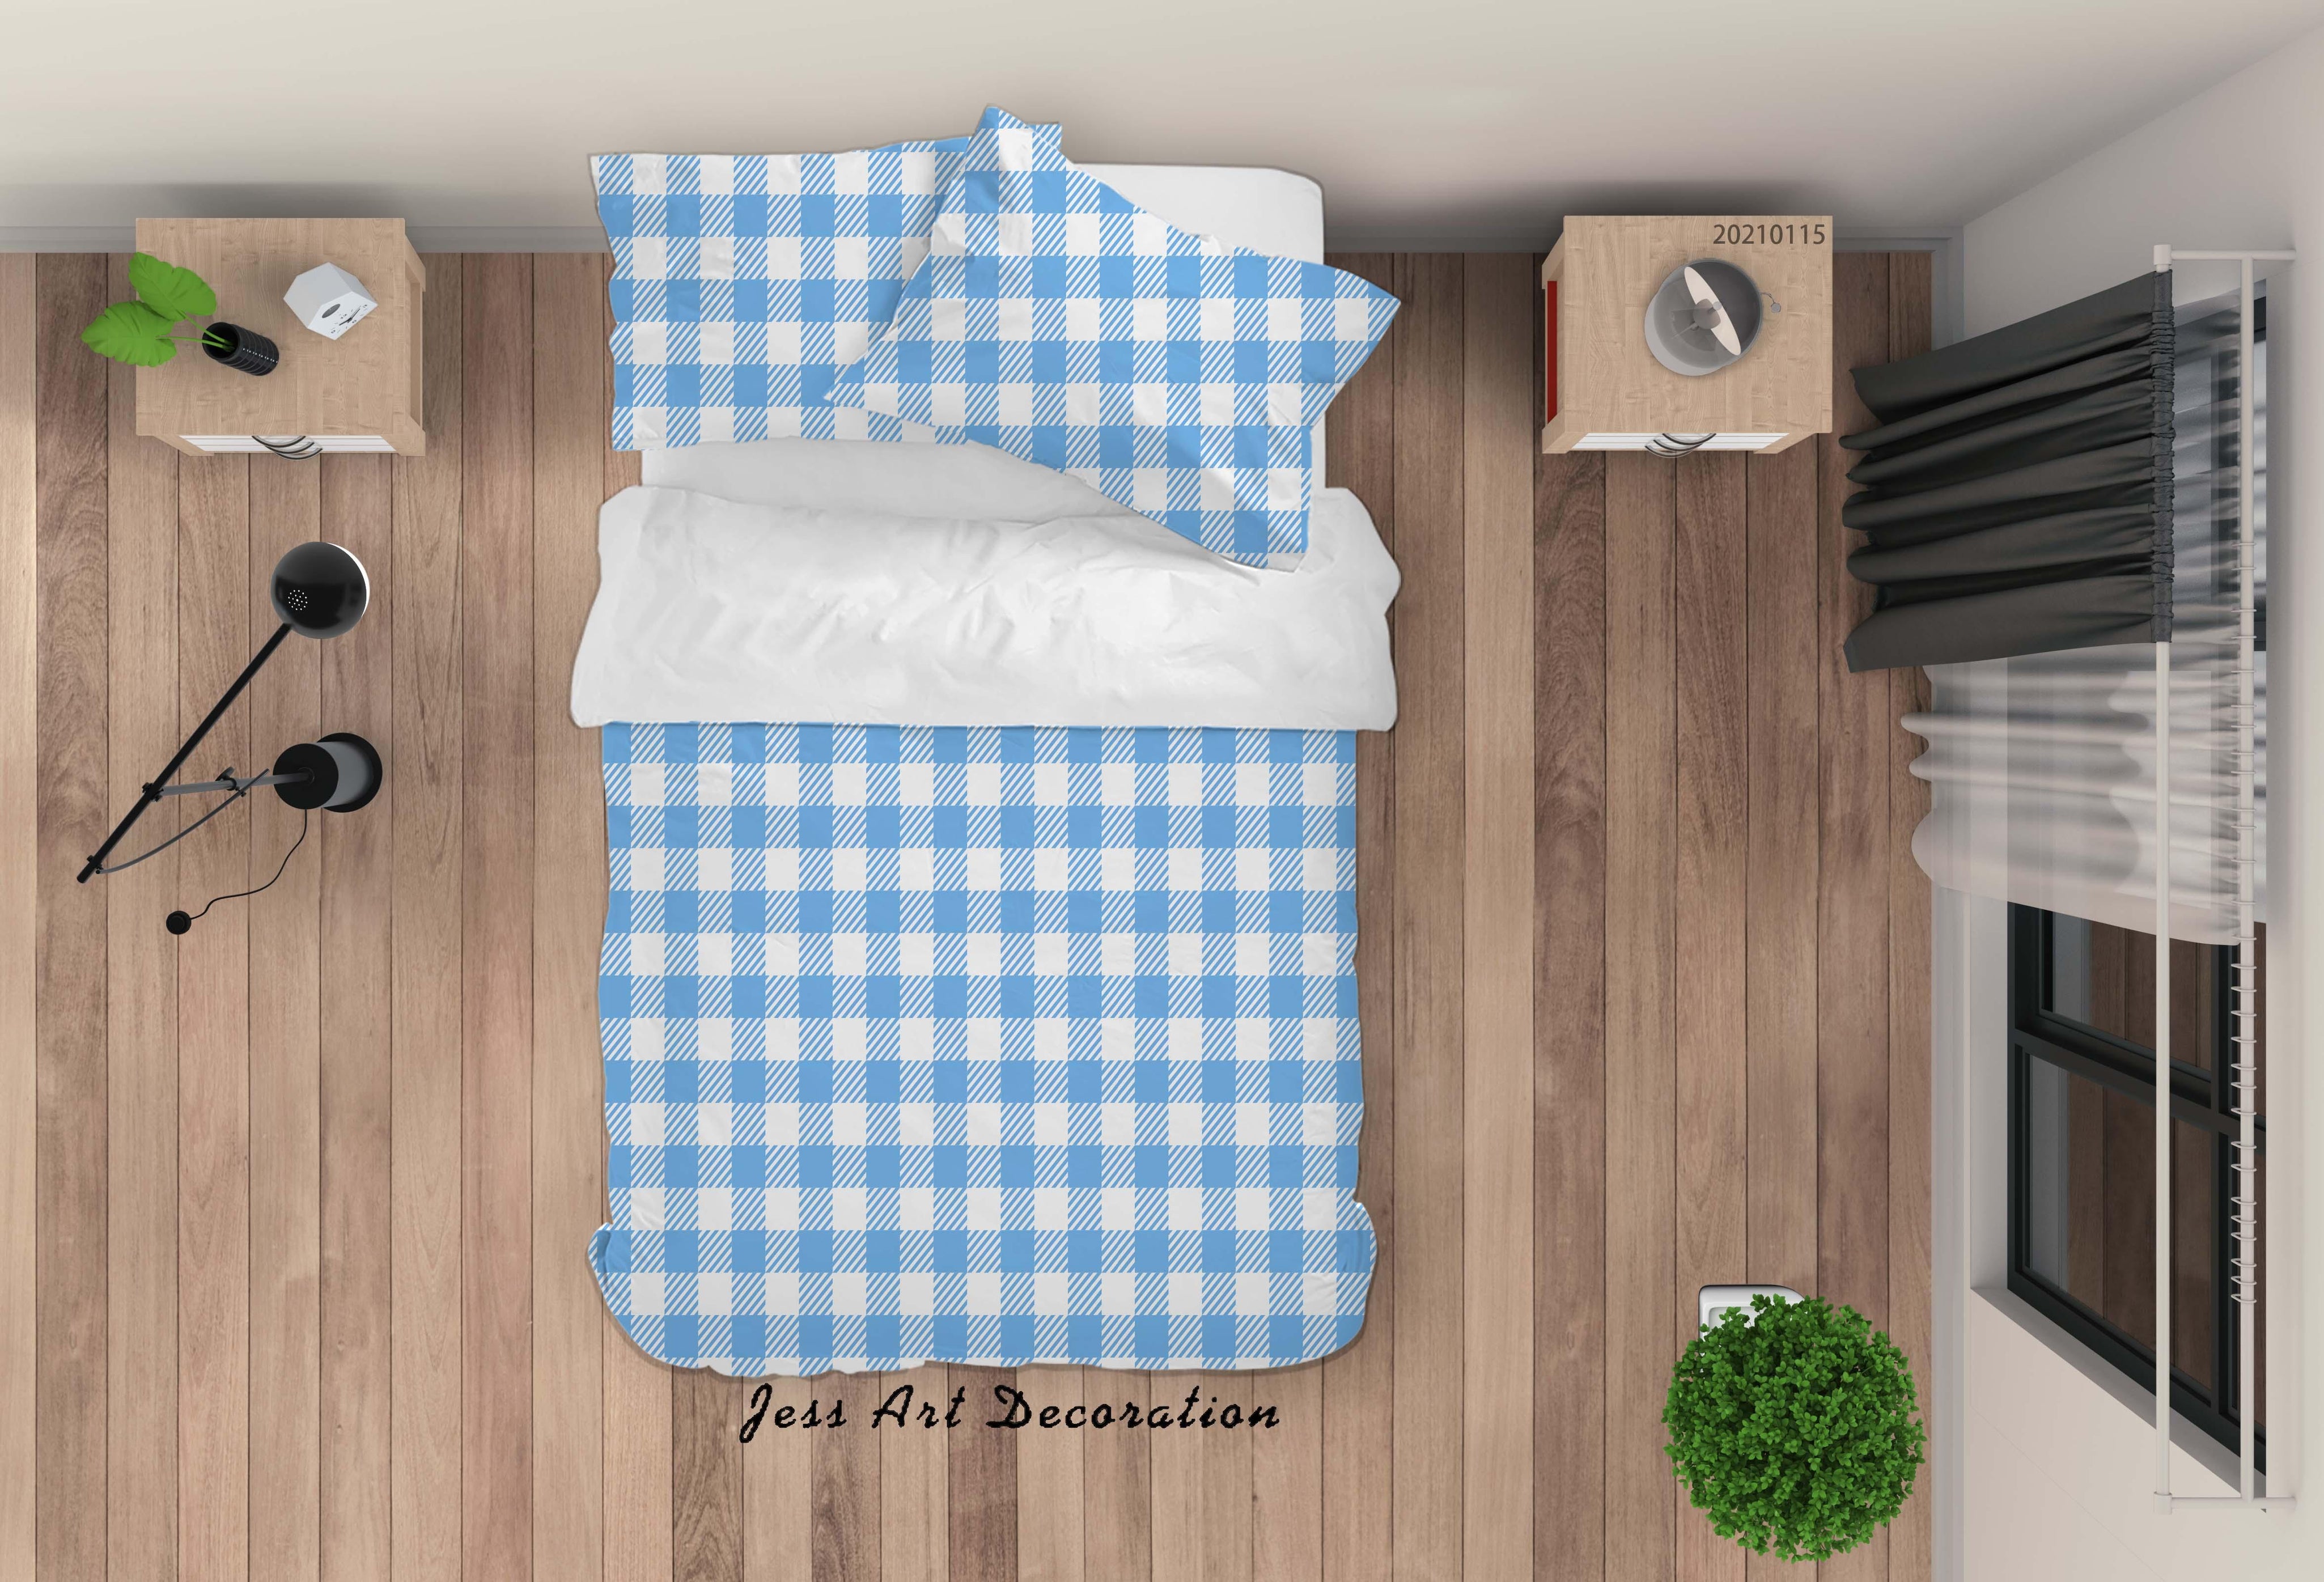 3D Abstract Blue Geometric Checkered Quilt Cover Set Bedding Set Duvet Cover Pillowcases 88- Jess Art Decoration